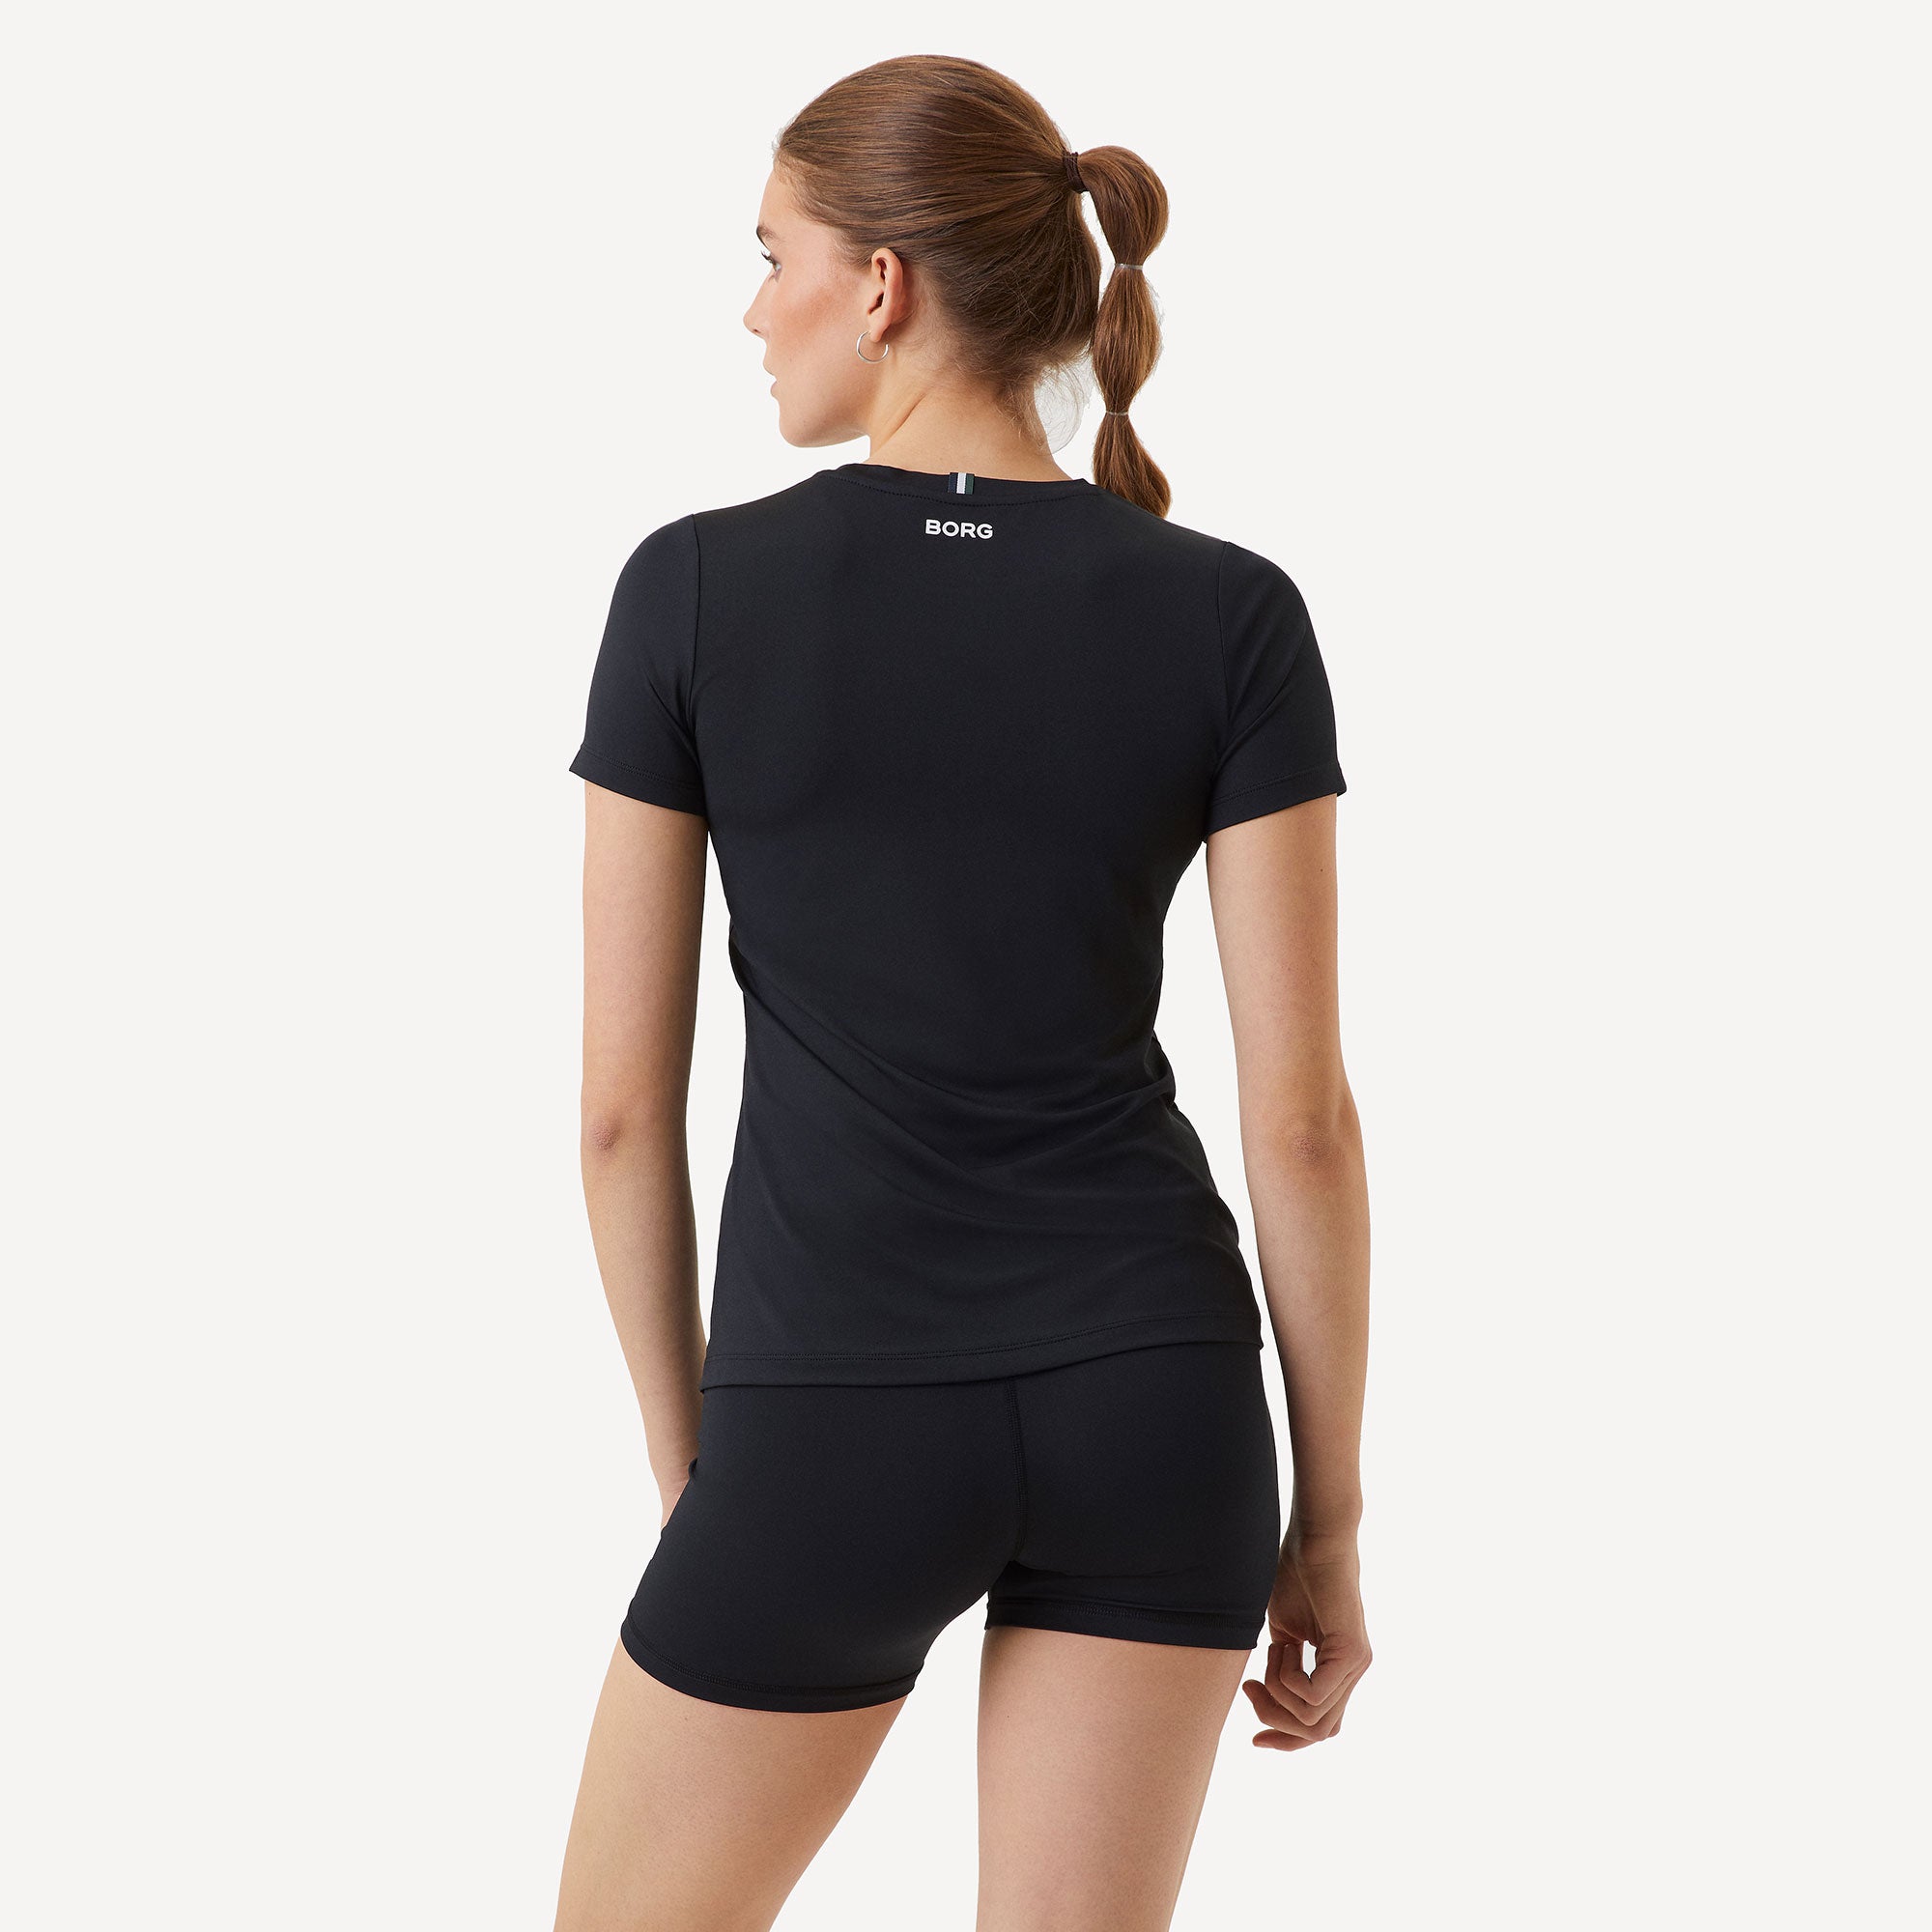 Björn Borg Ace Women's Slim Tennis Shirt - Black (2)